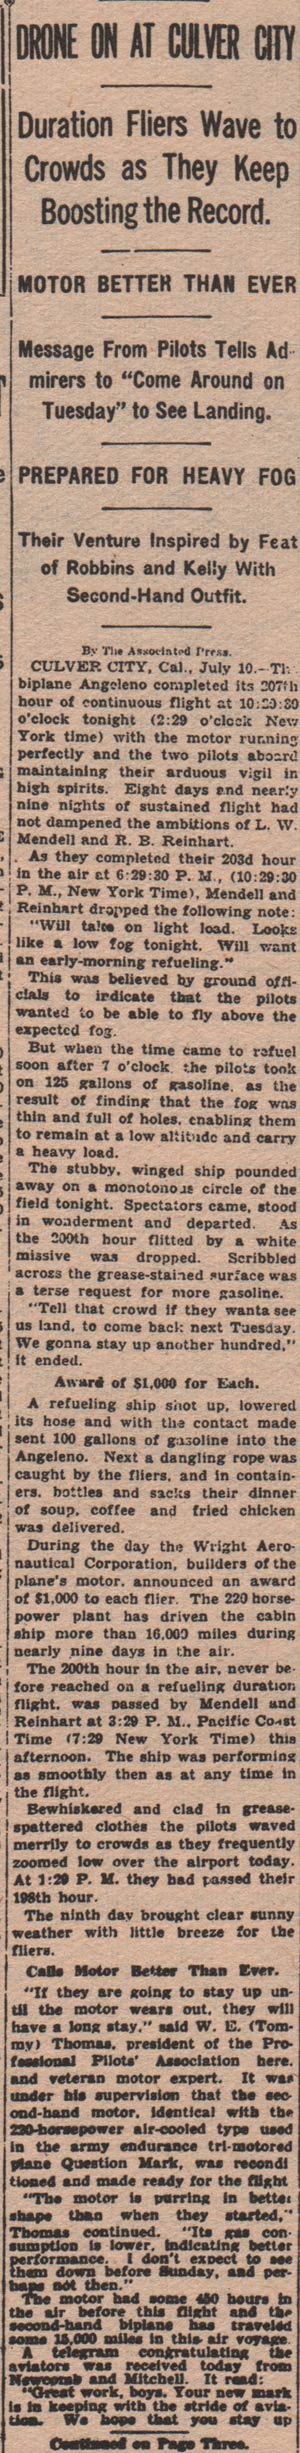 Flight of Mendell, Reinhart & Angeleno, New York Times, July 11, 1929 (Source: NYT)